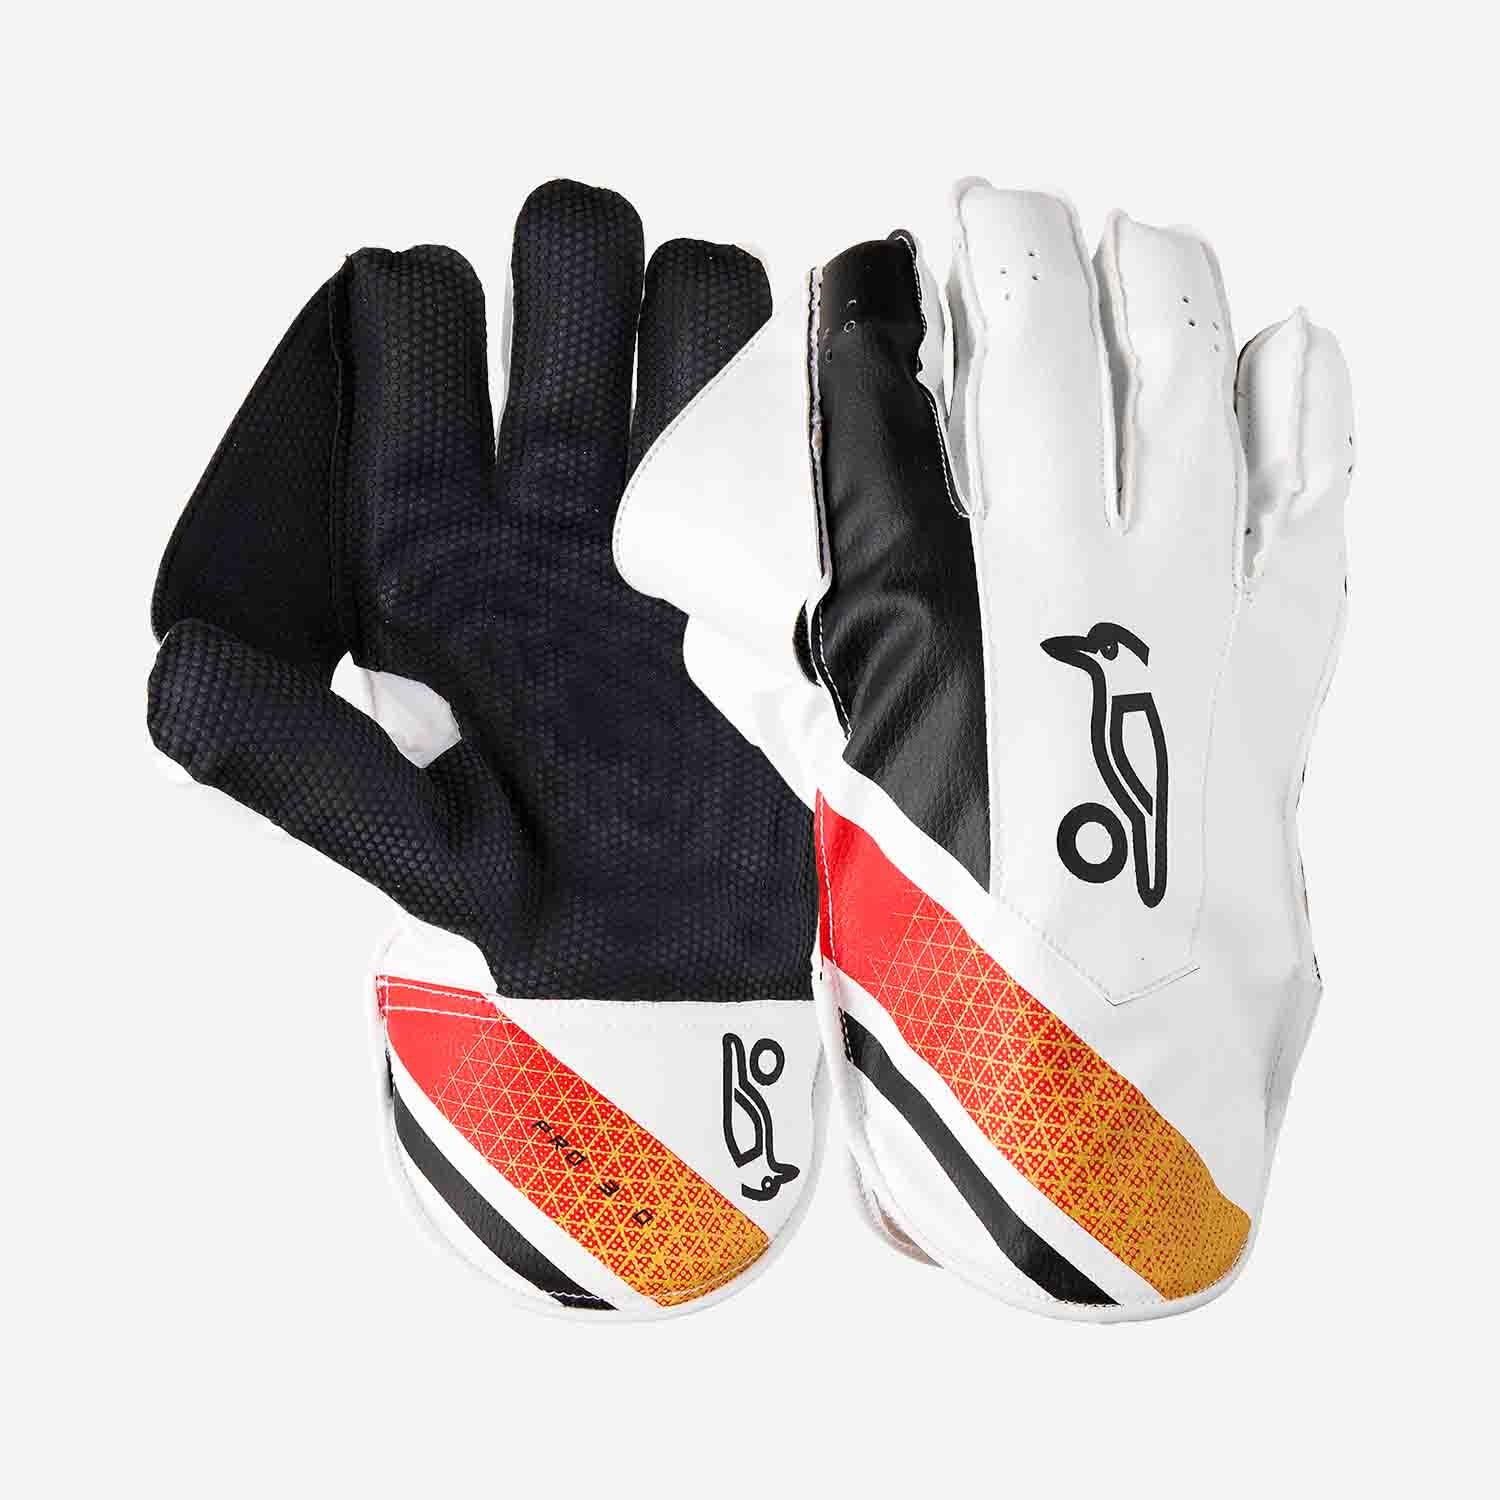 Kookaburra Beast Pro 3.0 Wicket Keeping Gloves